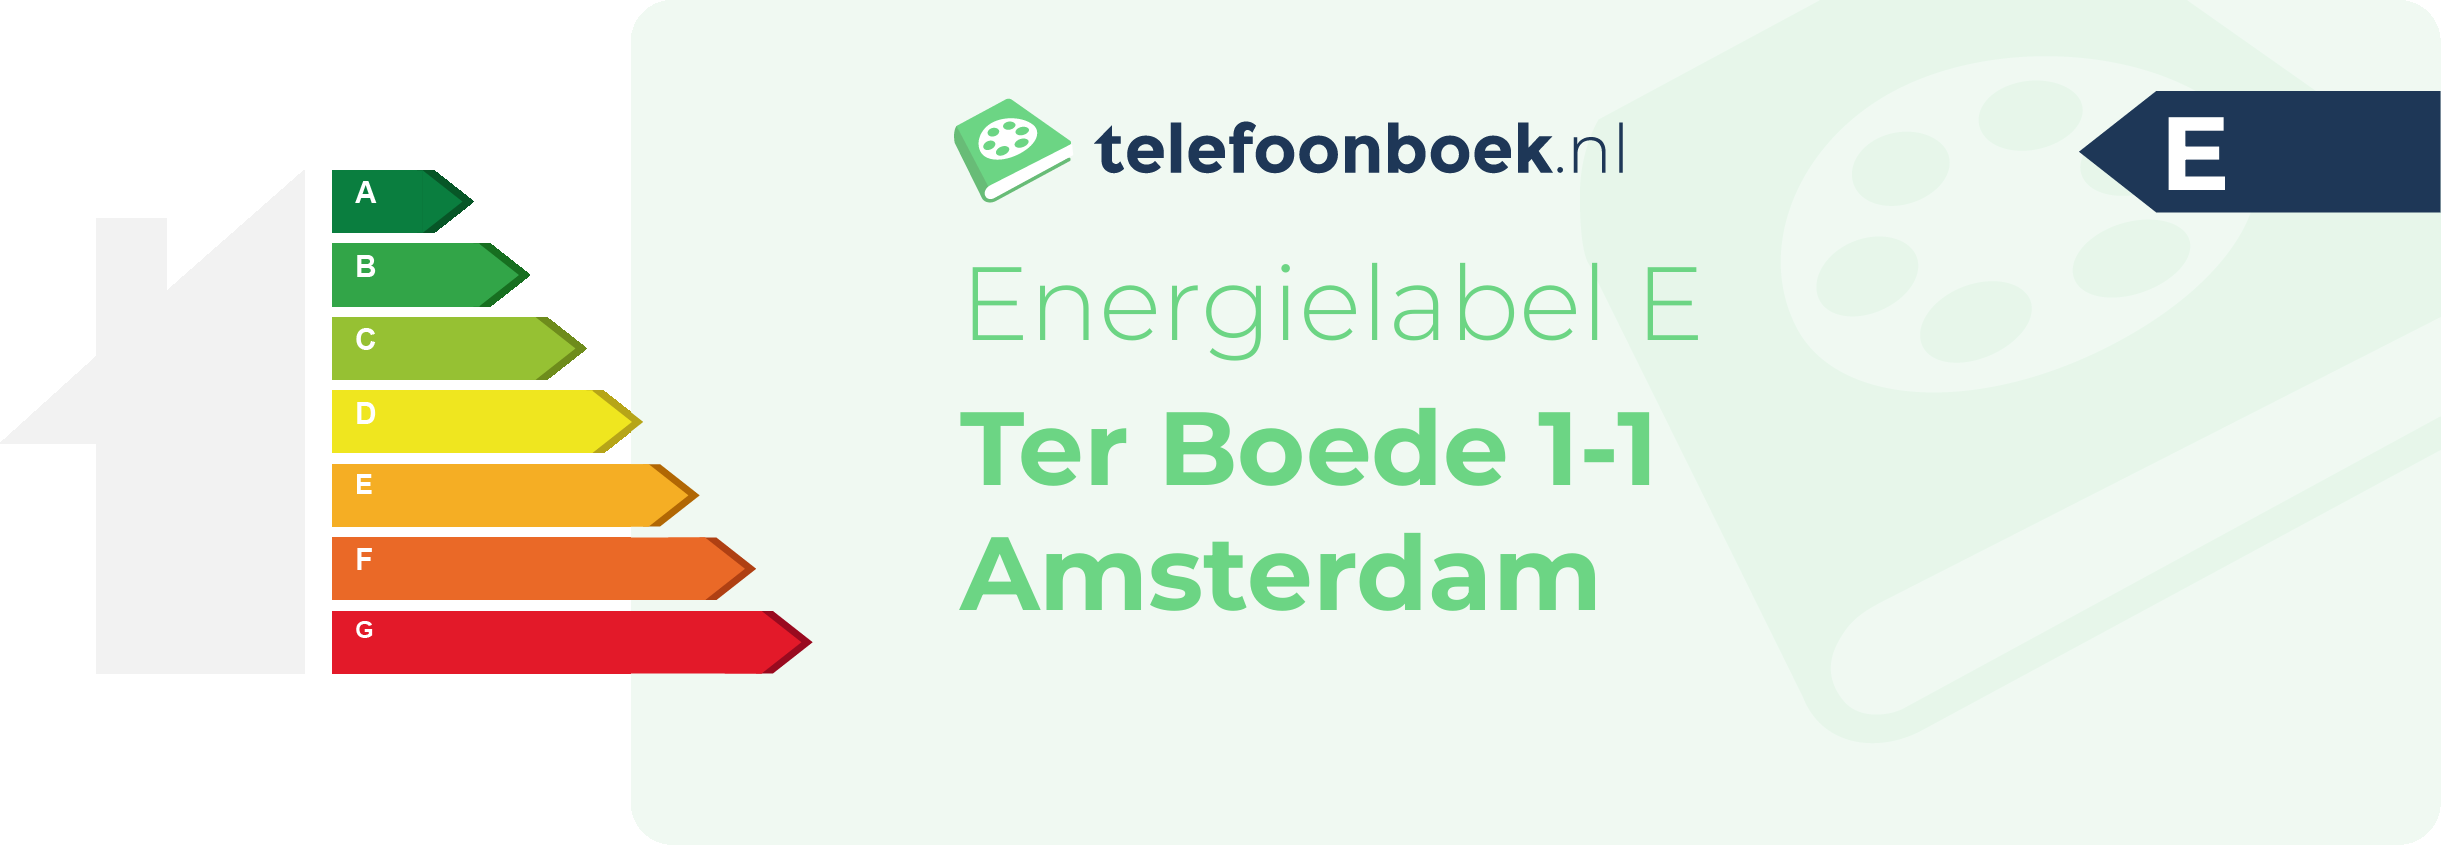 Energielabel Ter Boede 1-1 Amsterdam